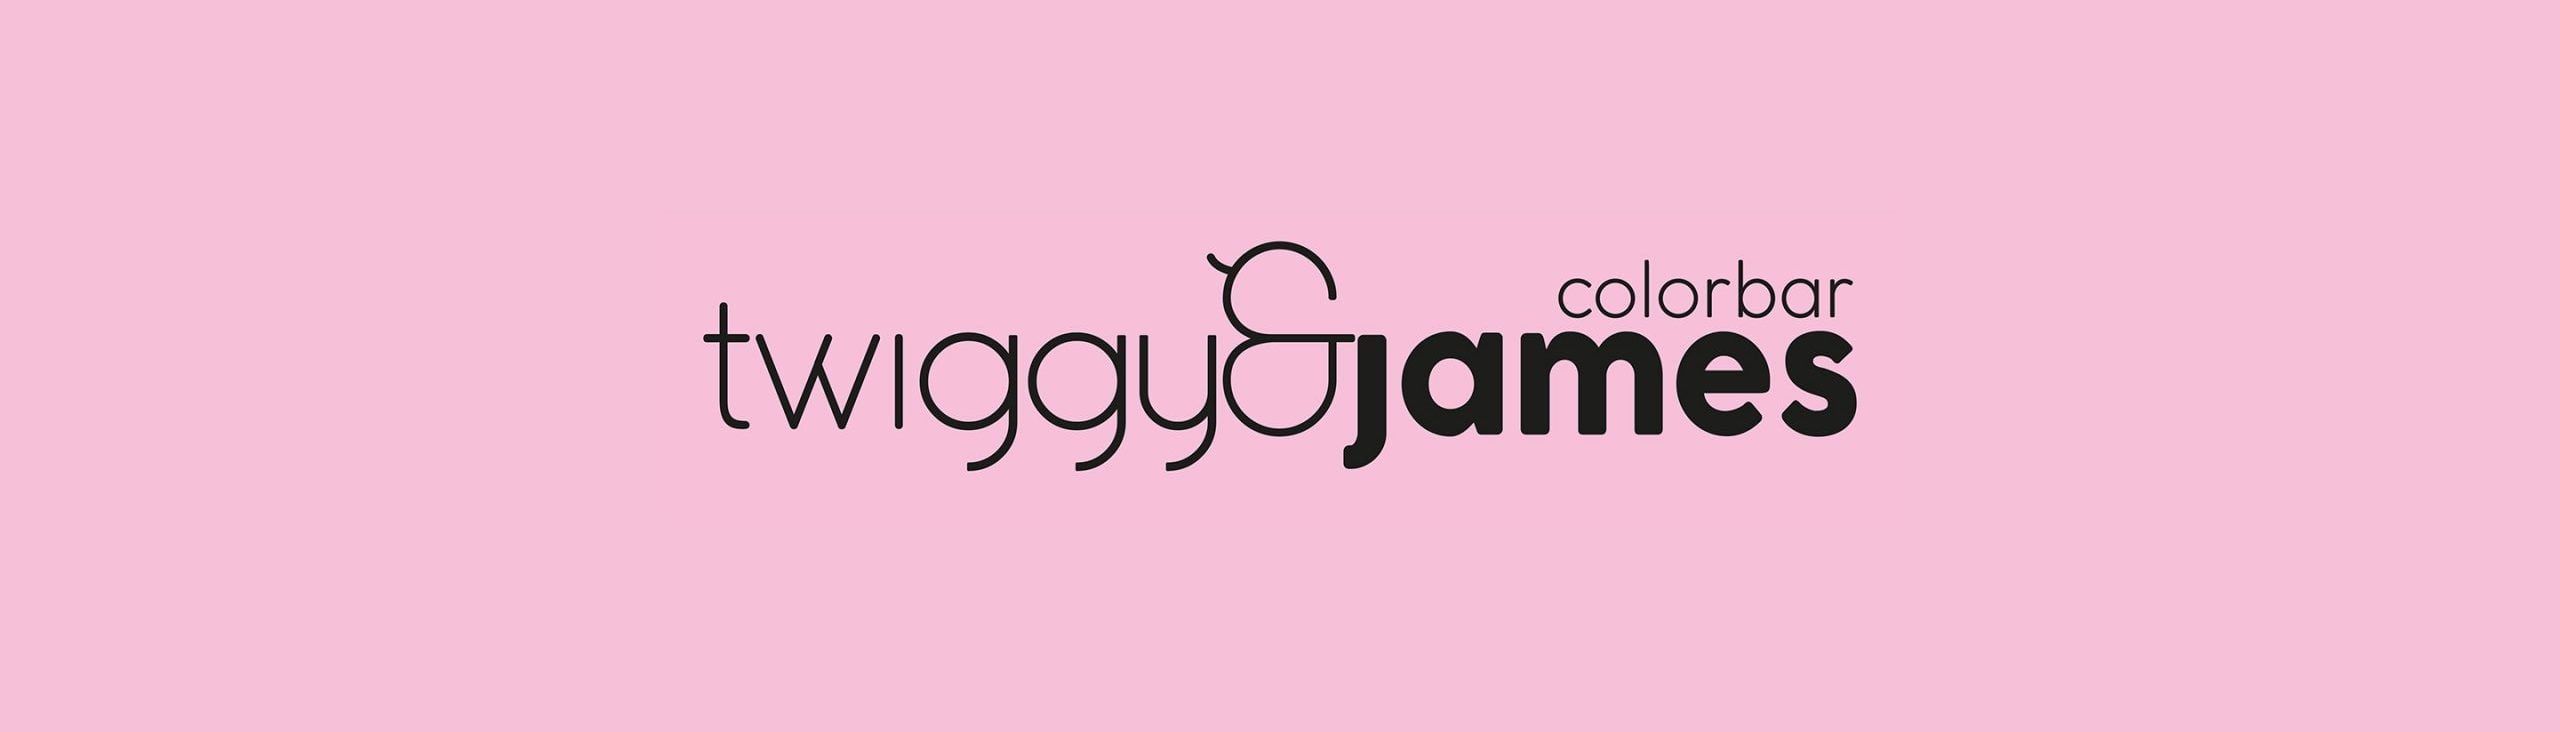 Twiggy&James Colorbar